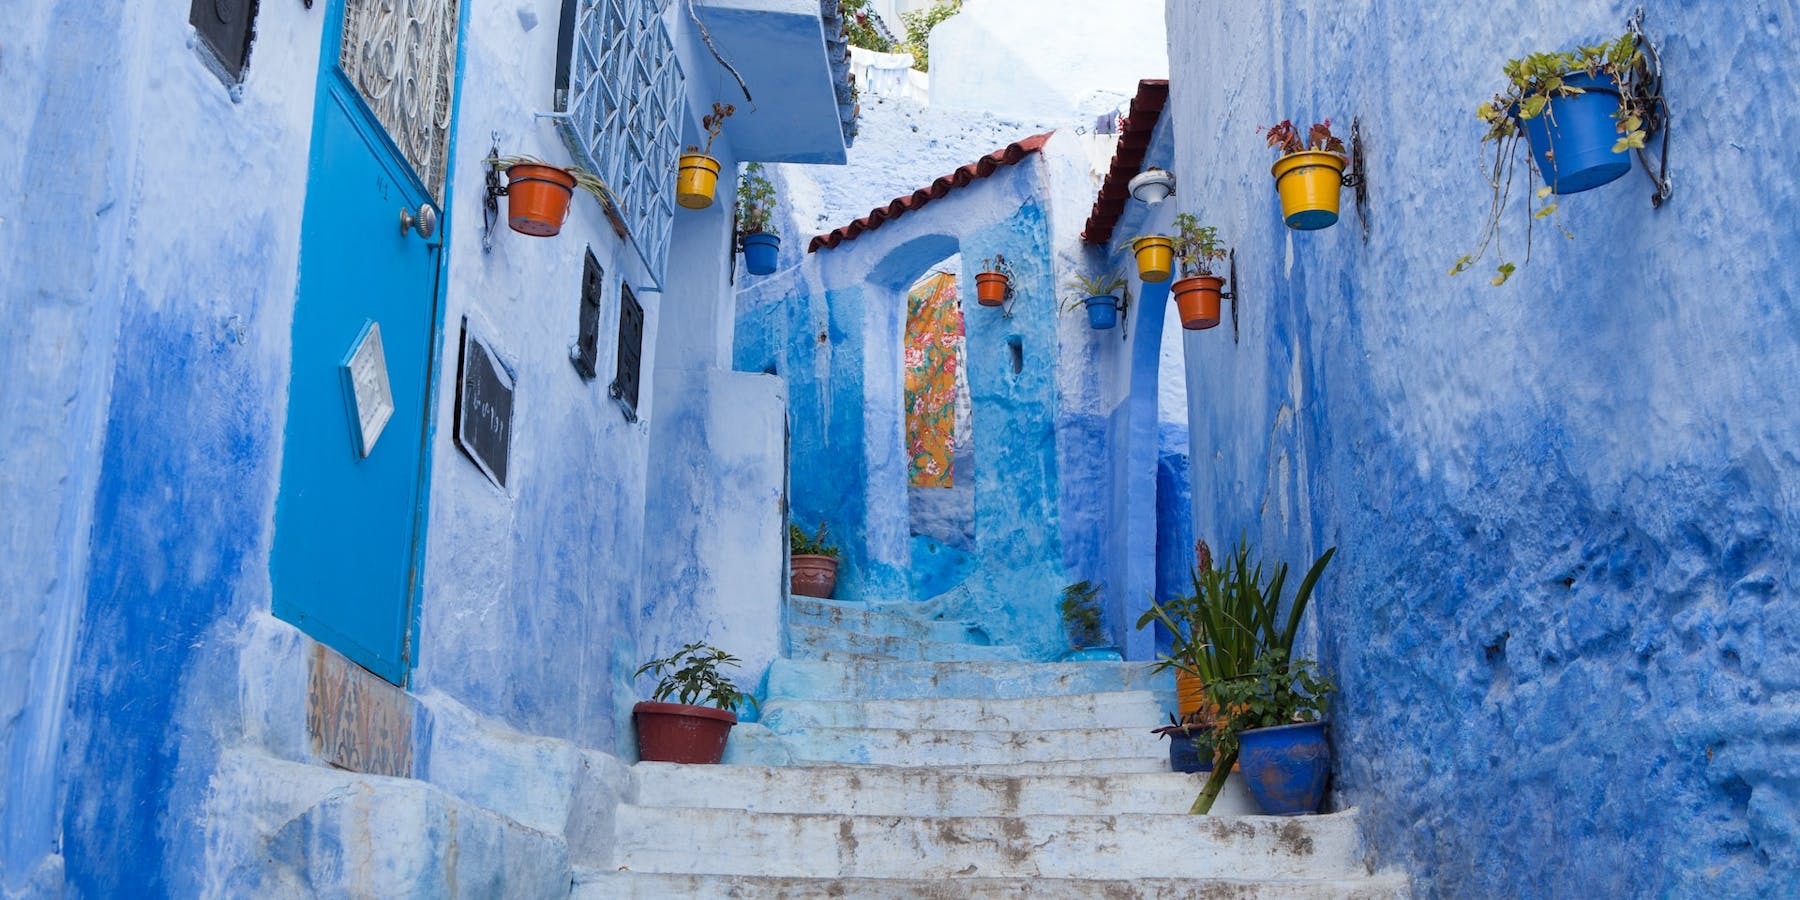 Blue city of Chefchouen, Morocco